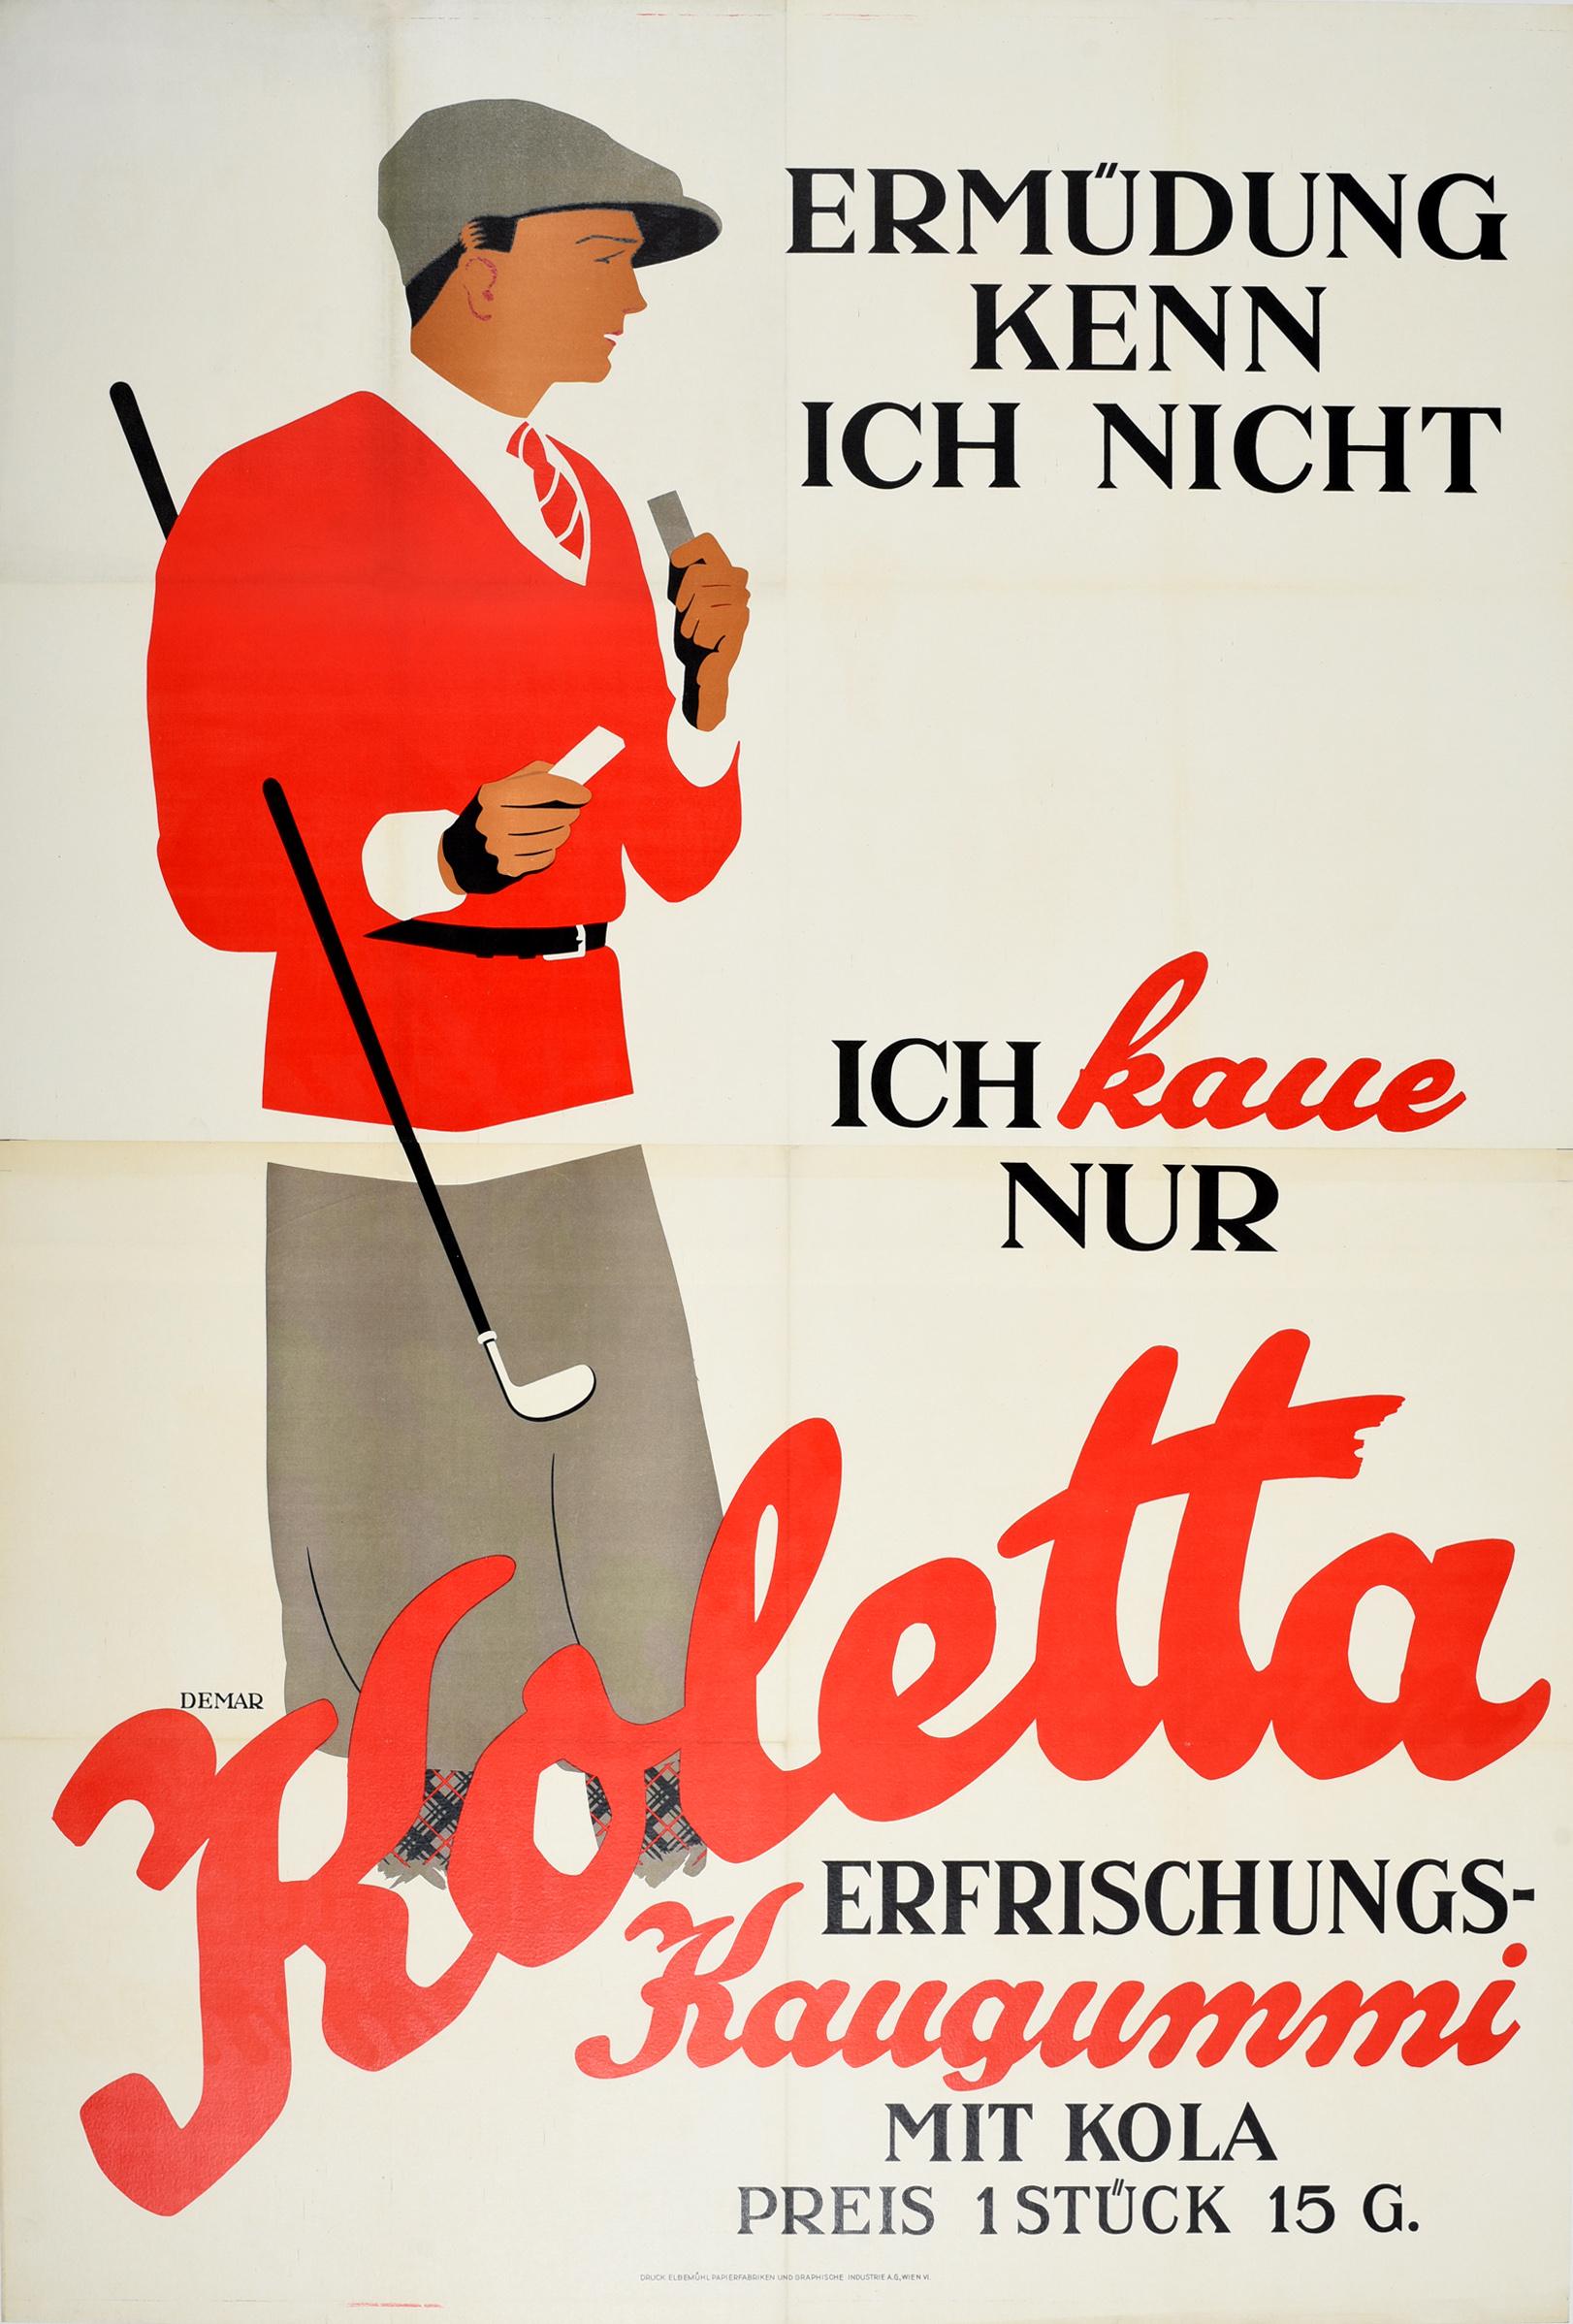 Ernst Demar Print - Original Vintage Poster For Koletta Chewing Gum With Cola Golfer Advertising Art